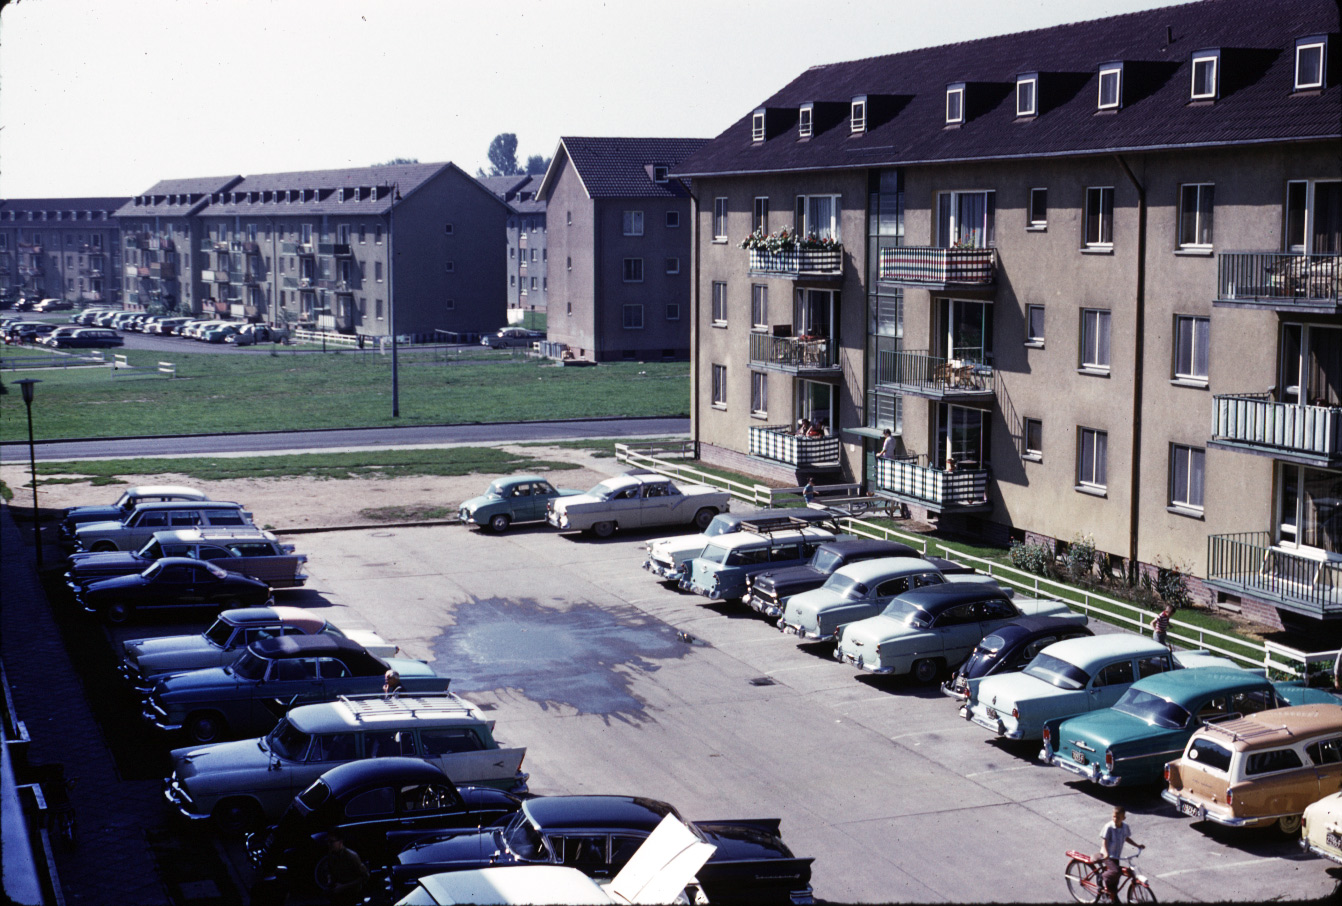 Platenstraße housing 1960